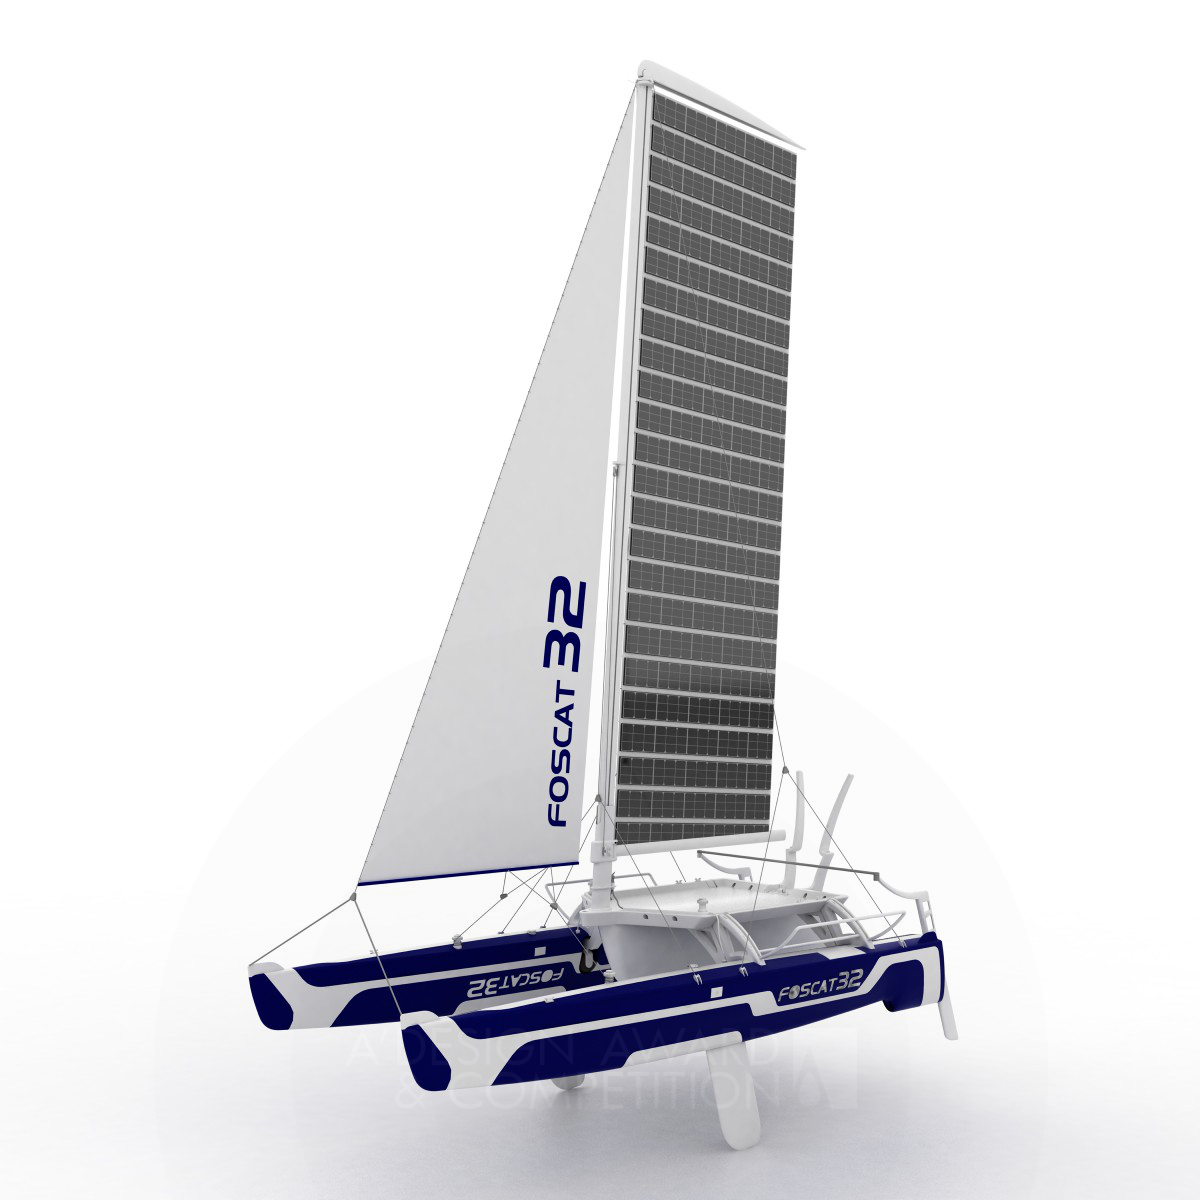 Foscat-32 Folding Solar Catamaran by Hakan Gürsu